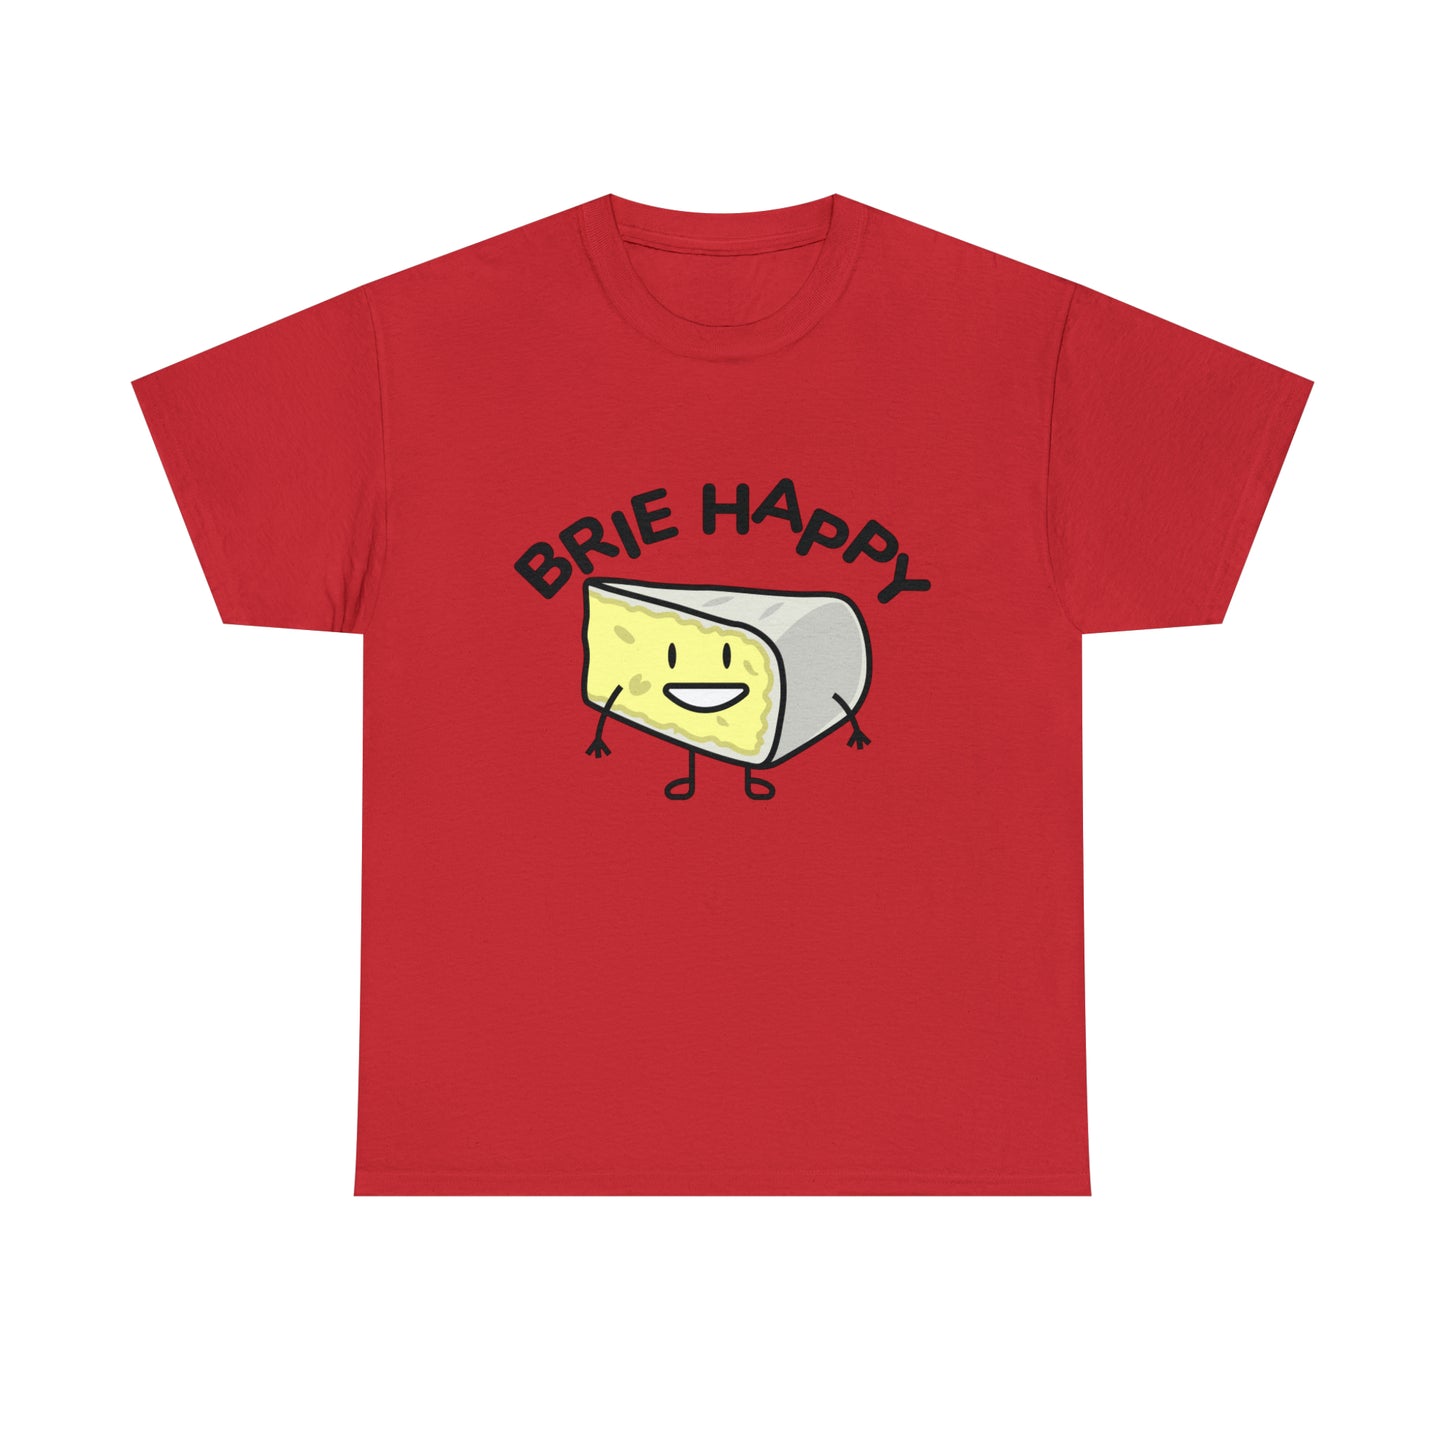 Custom Parody T-shirt, Brie happy design